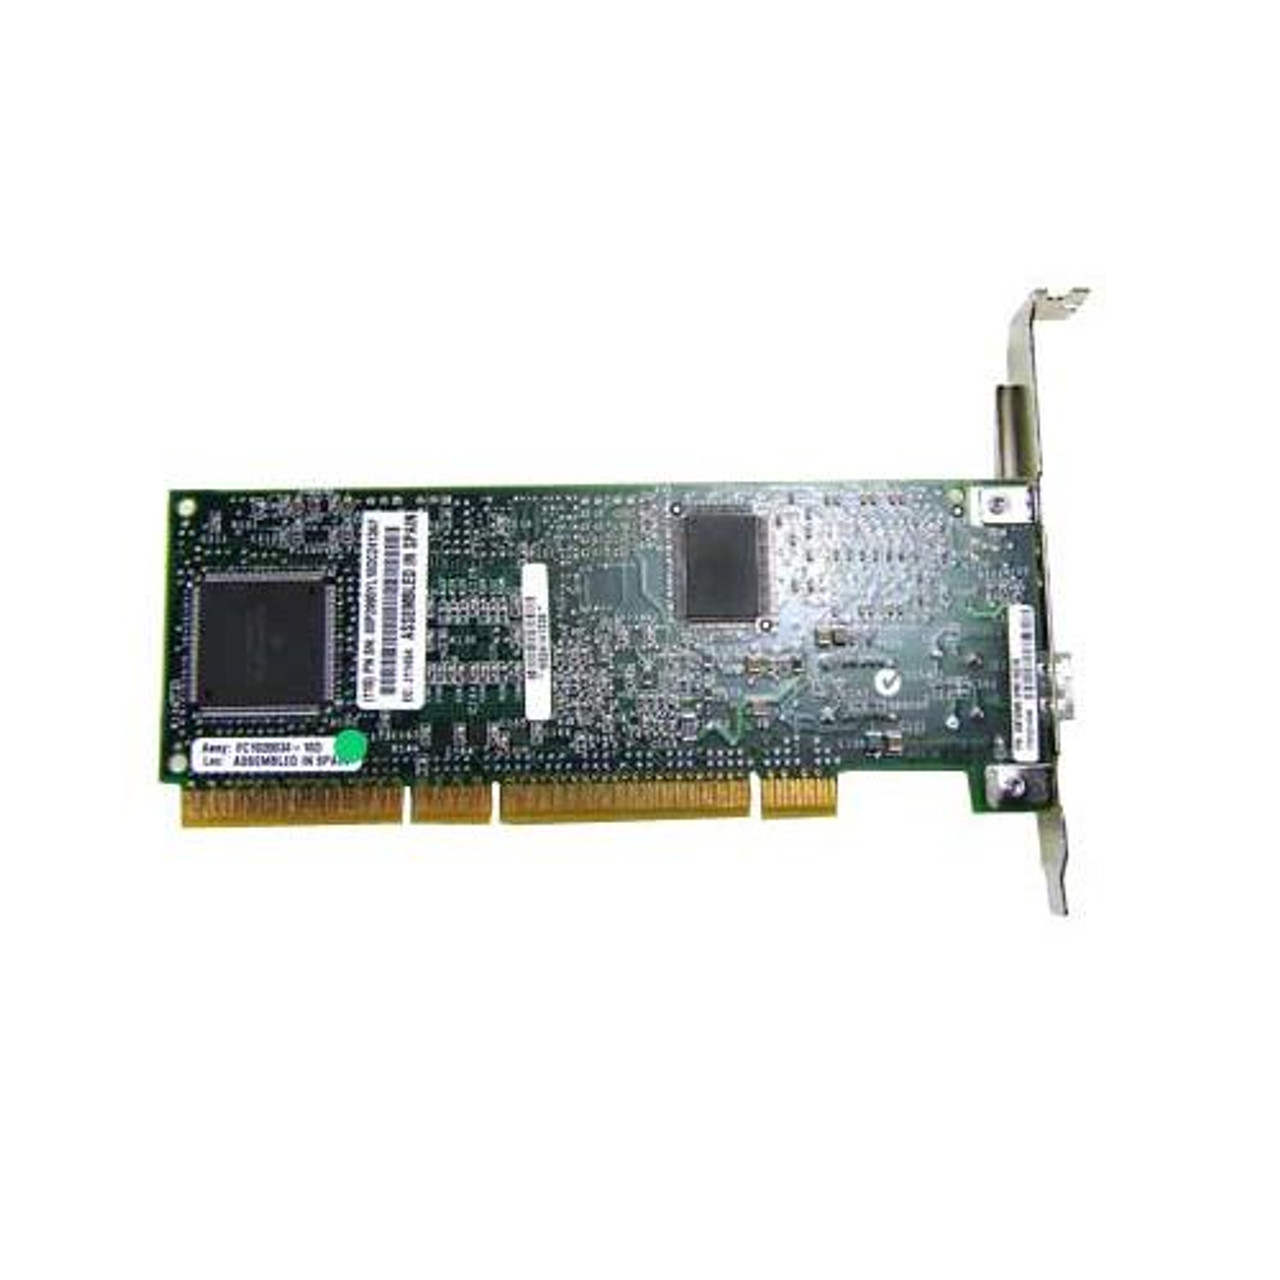 80P4384 - IBM TYPE 4-W 2765 2GB Single -Port 64-bit PCI LC Fibre Channel Host Bus Adapter with Standard Bracket